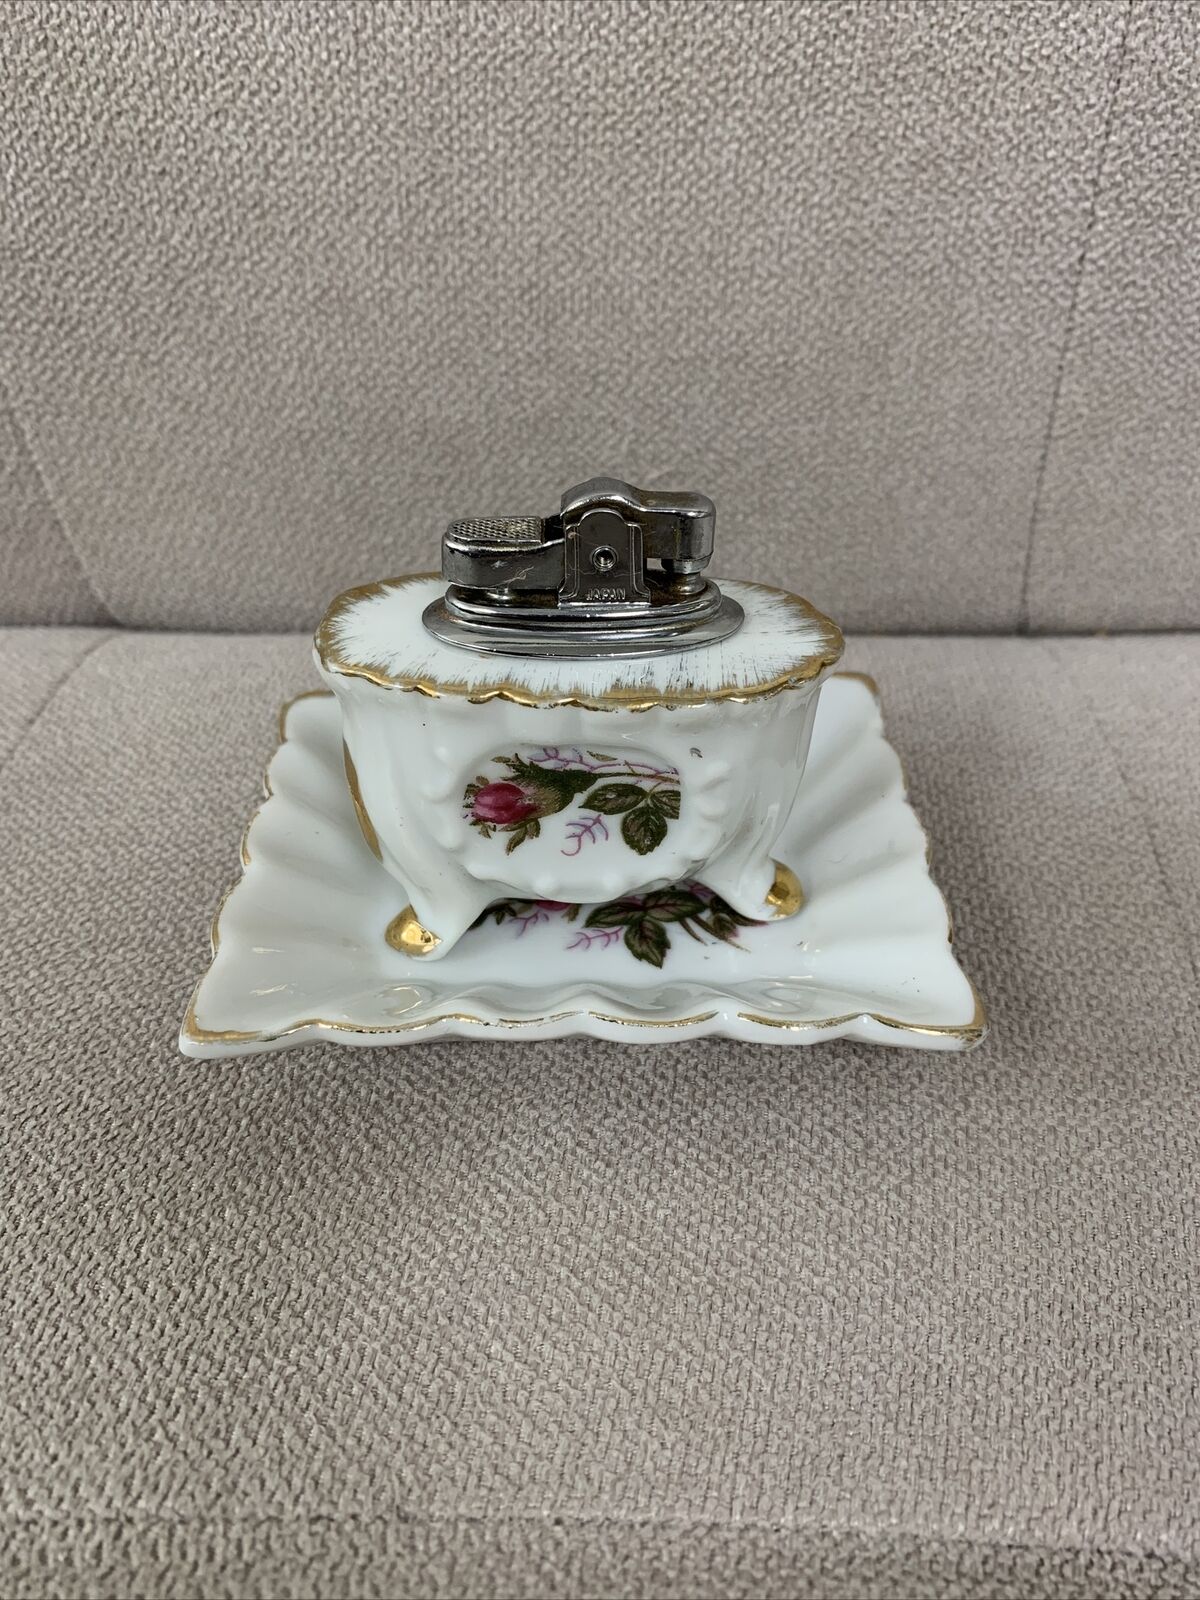 Antique Porcelain Table Lighter - Flower Design With Plate